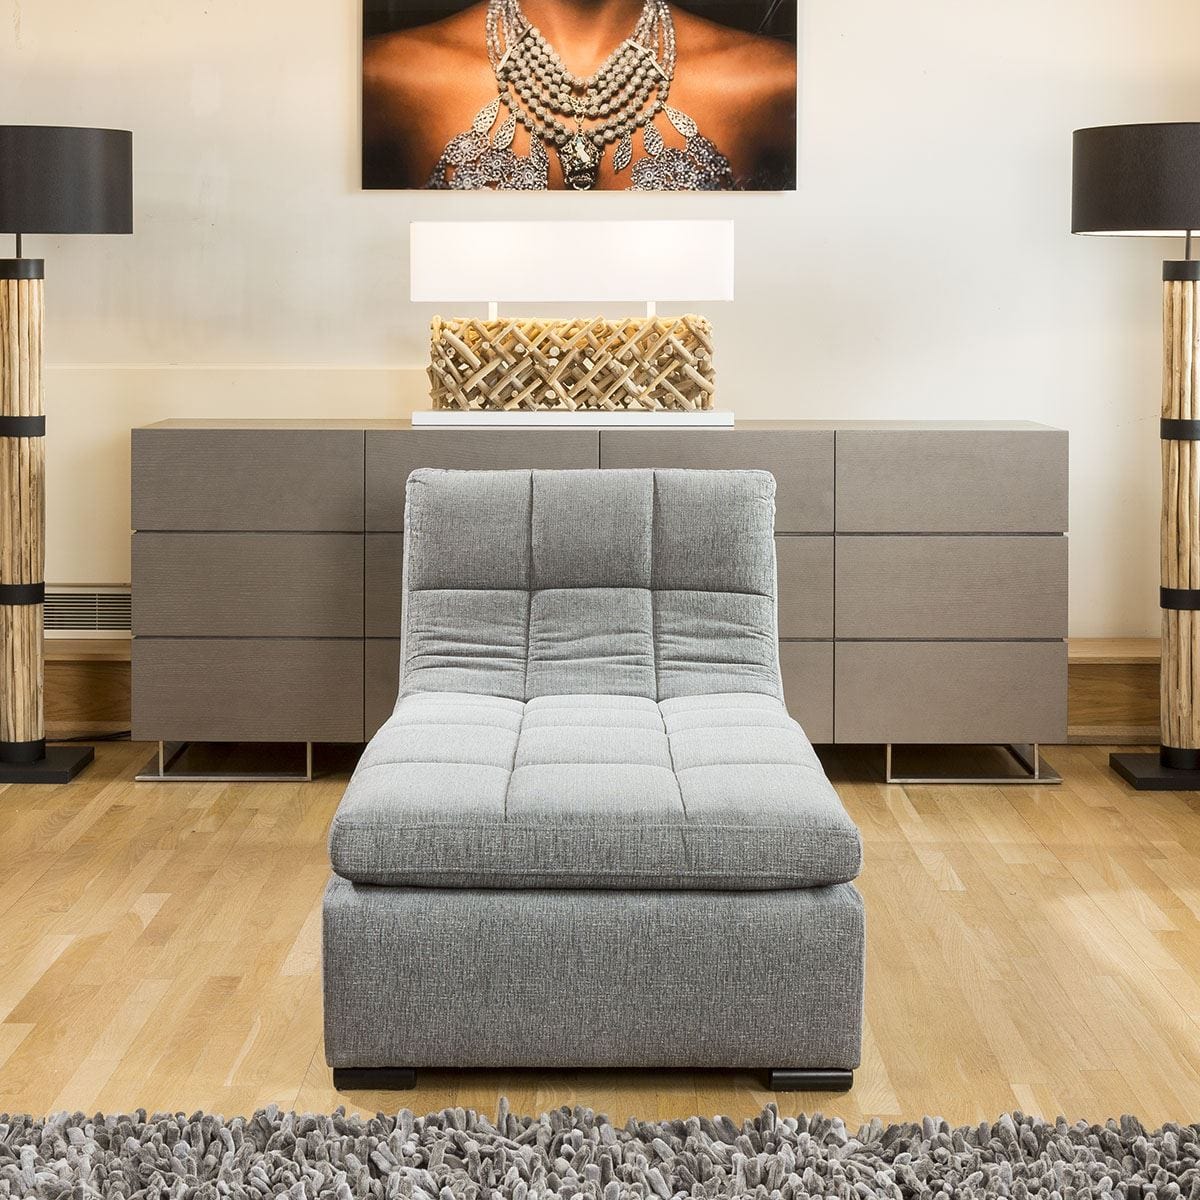 Quatropi Relax Premium Desginer Sofa Middle Piece Single Chair / Chase 80cm Wide